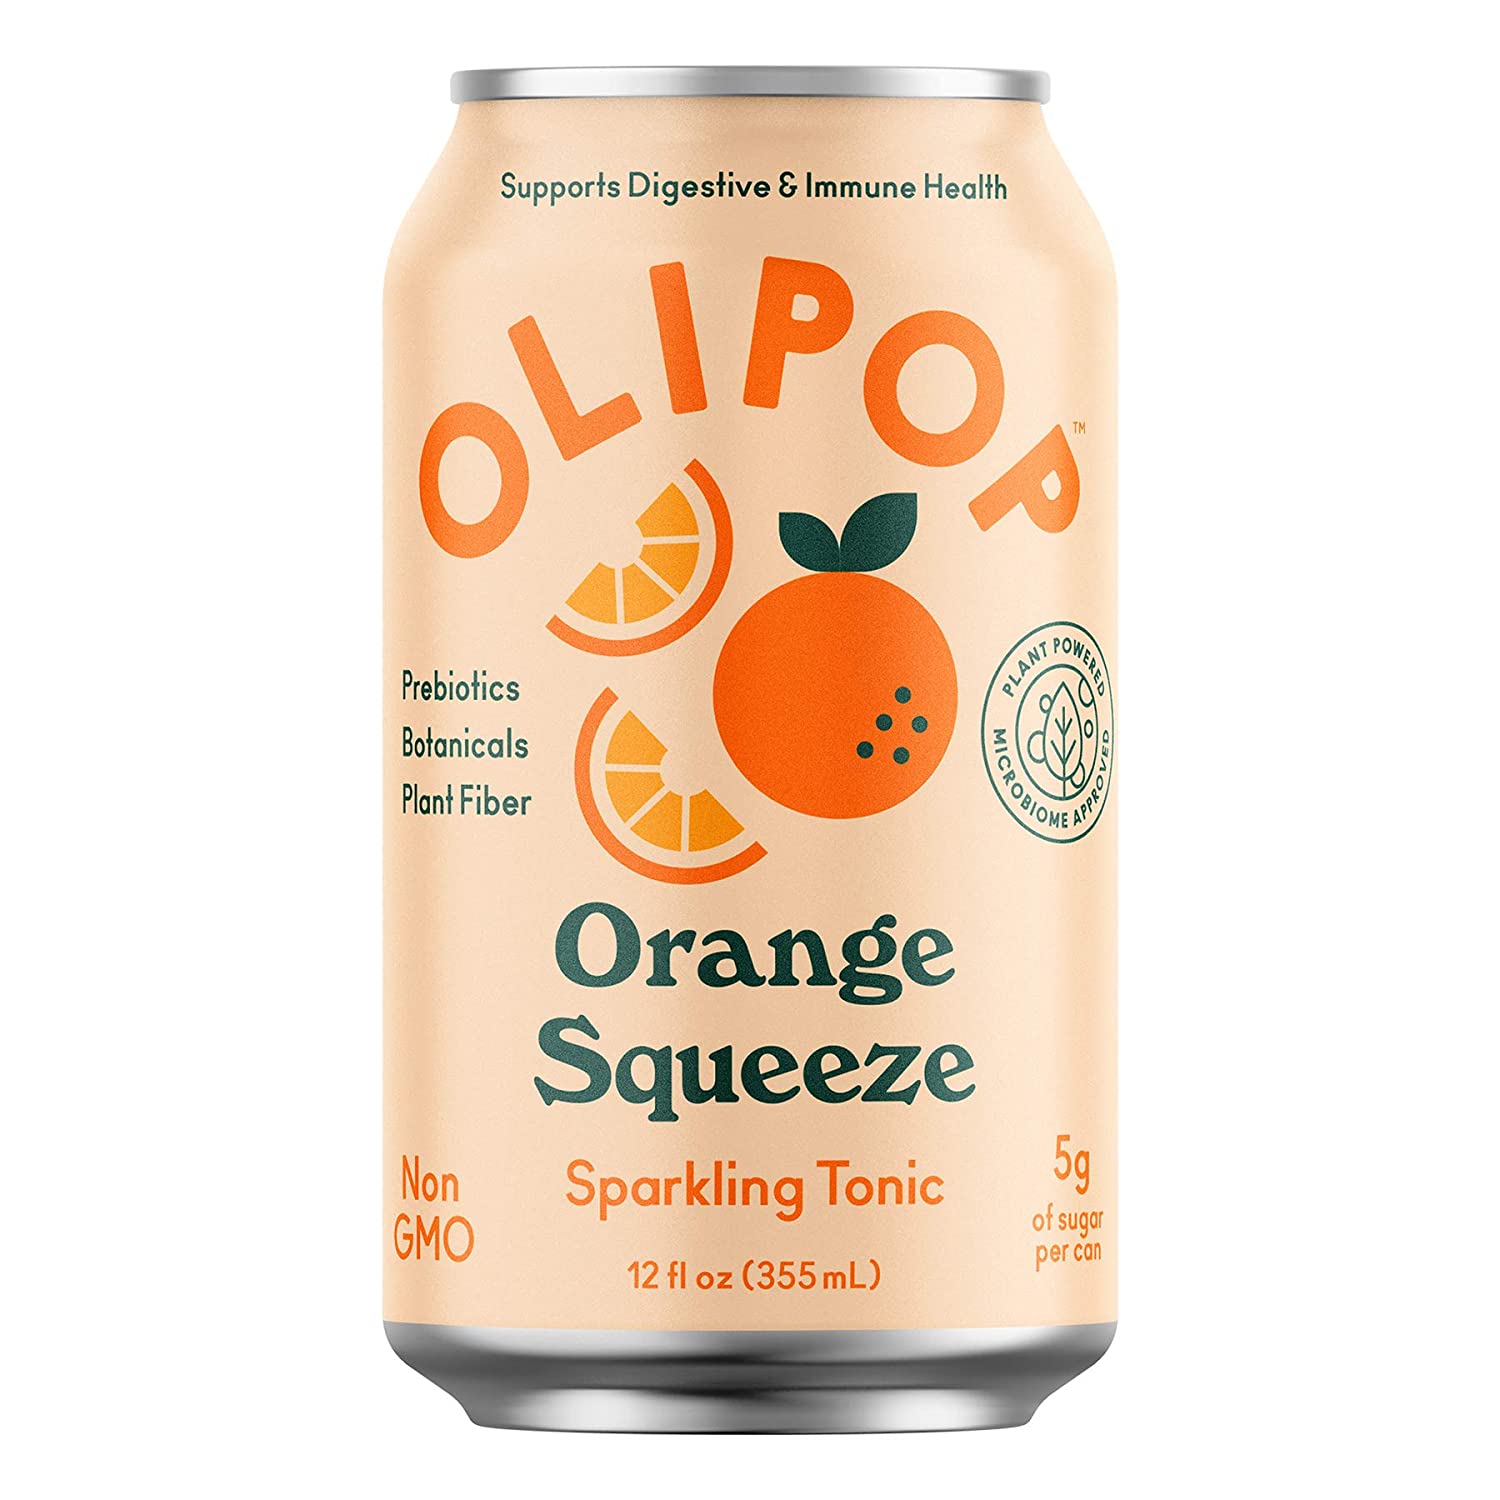 Olipop Sparkling Tonic Orange Squeeze